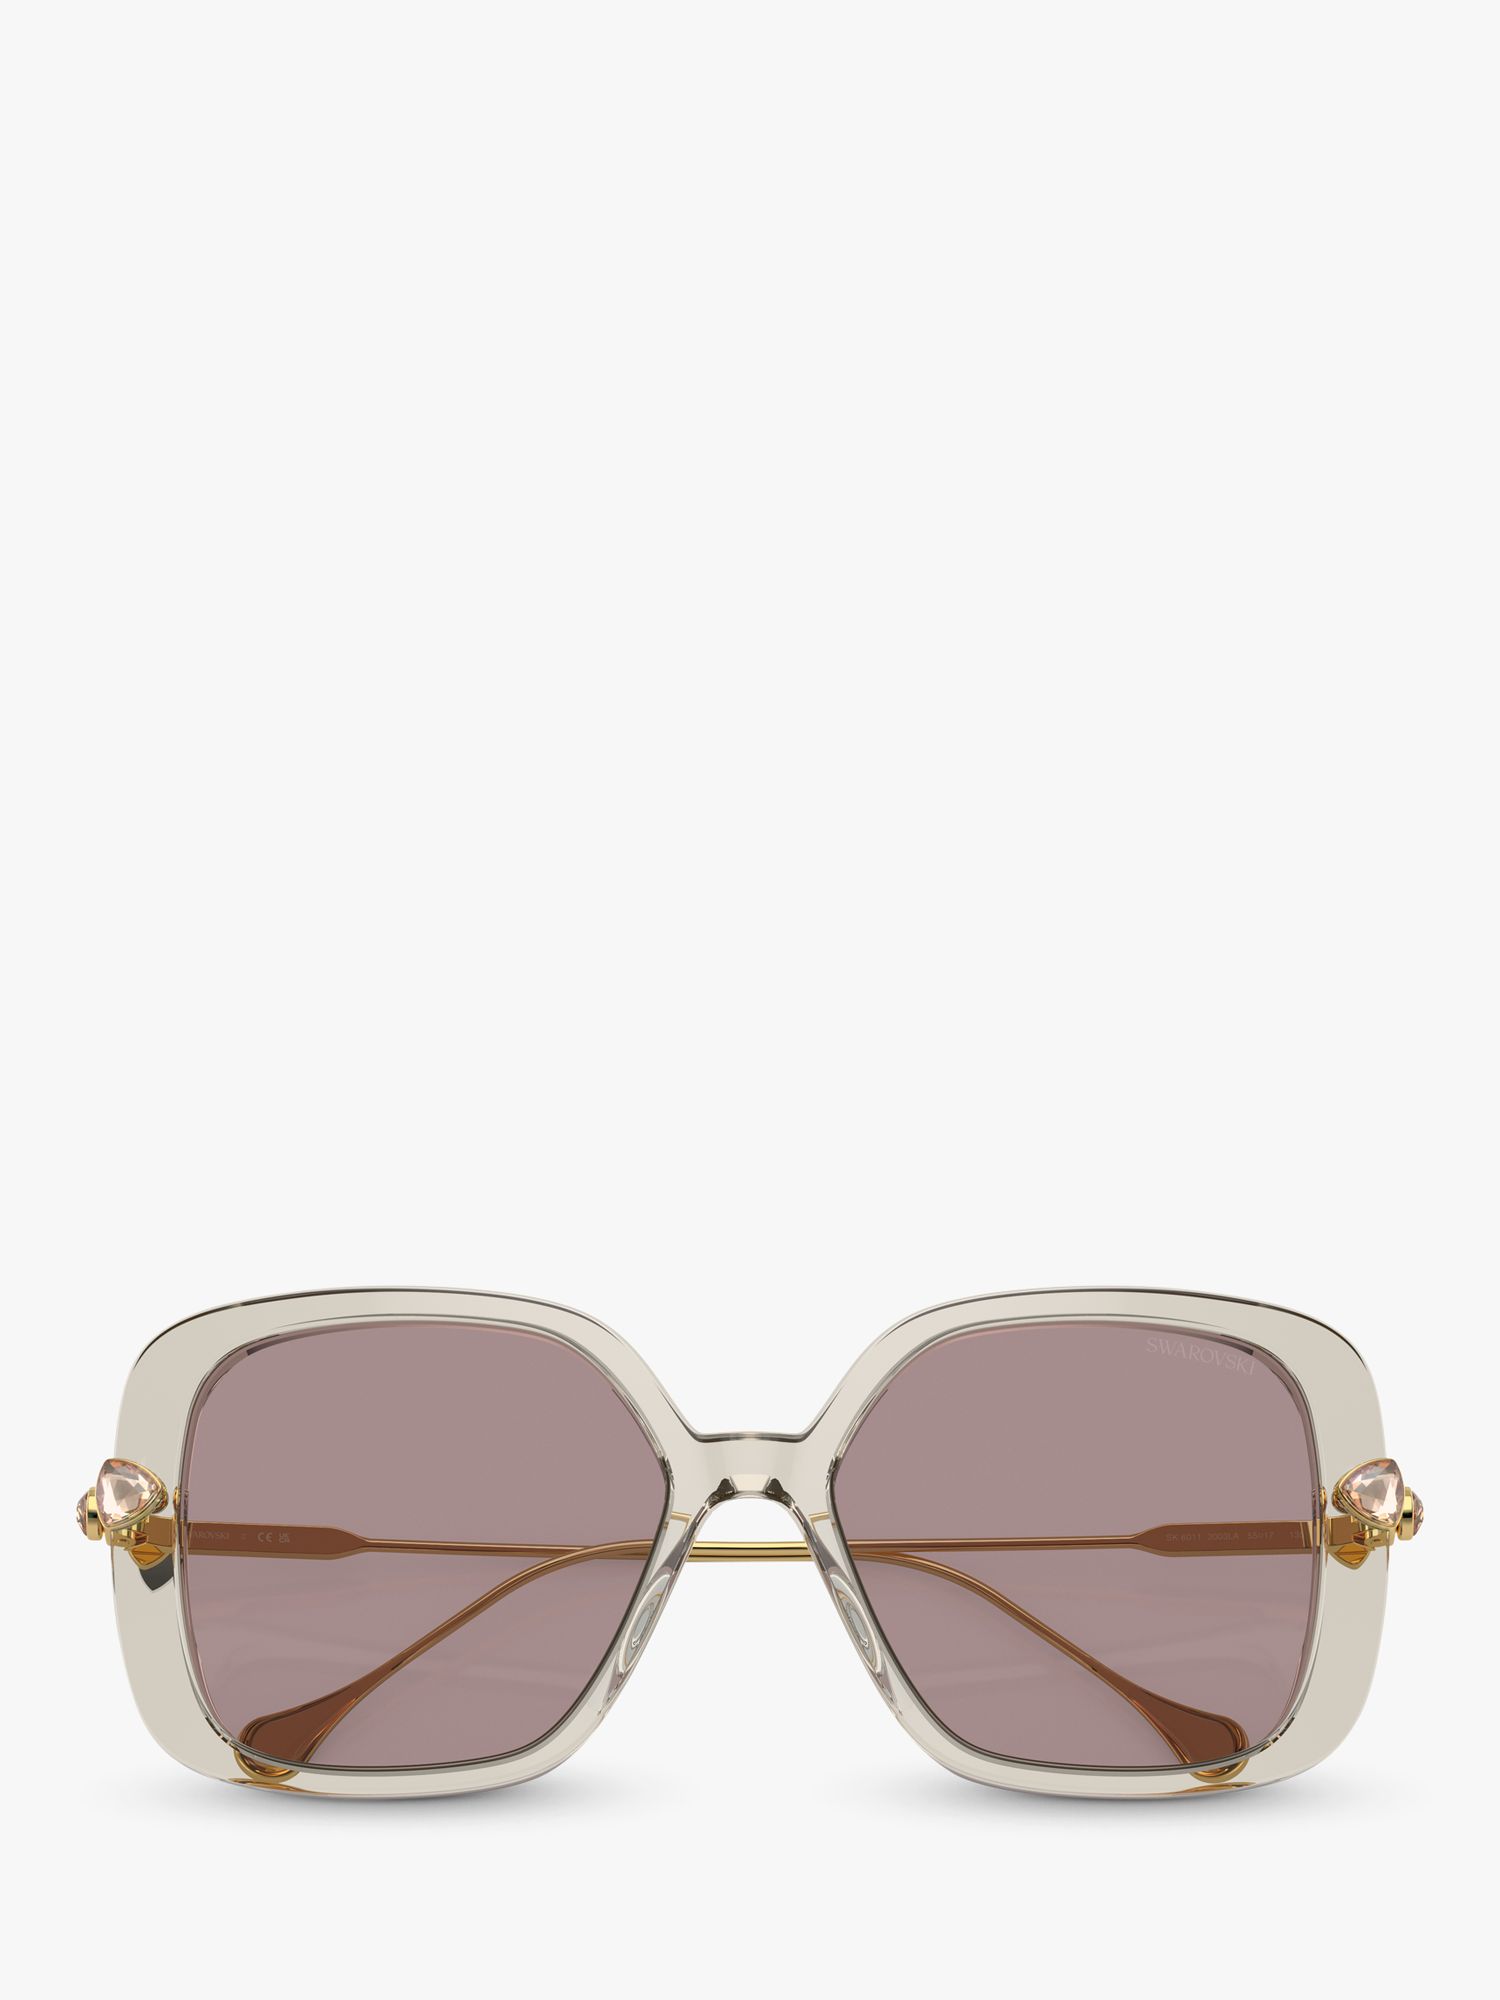 Swarovski SK6011 Women's Square Sunglasses, Transparent Light Brown/Violet